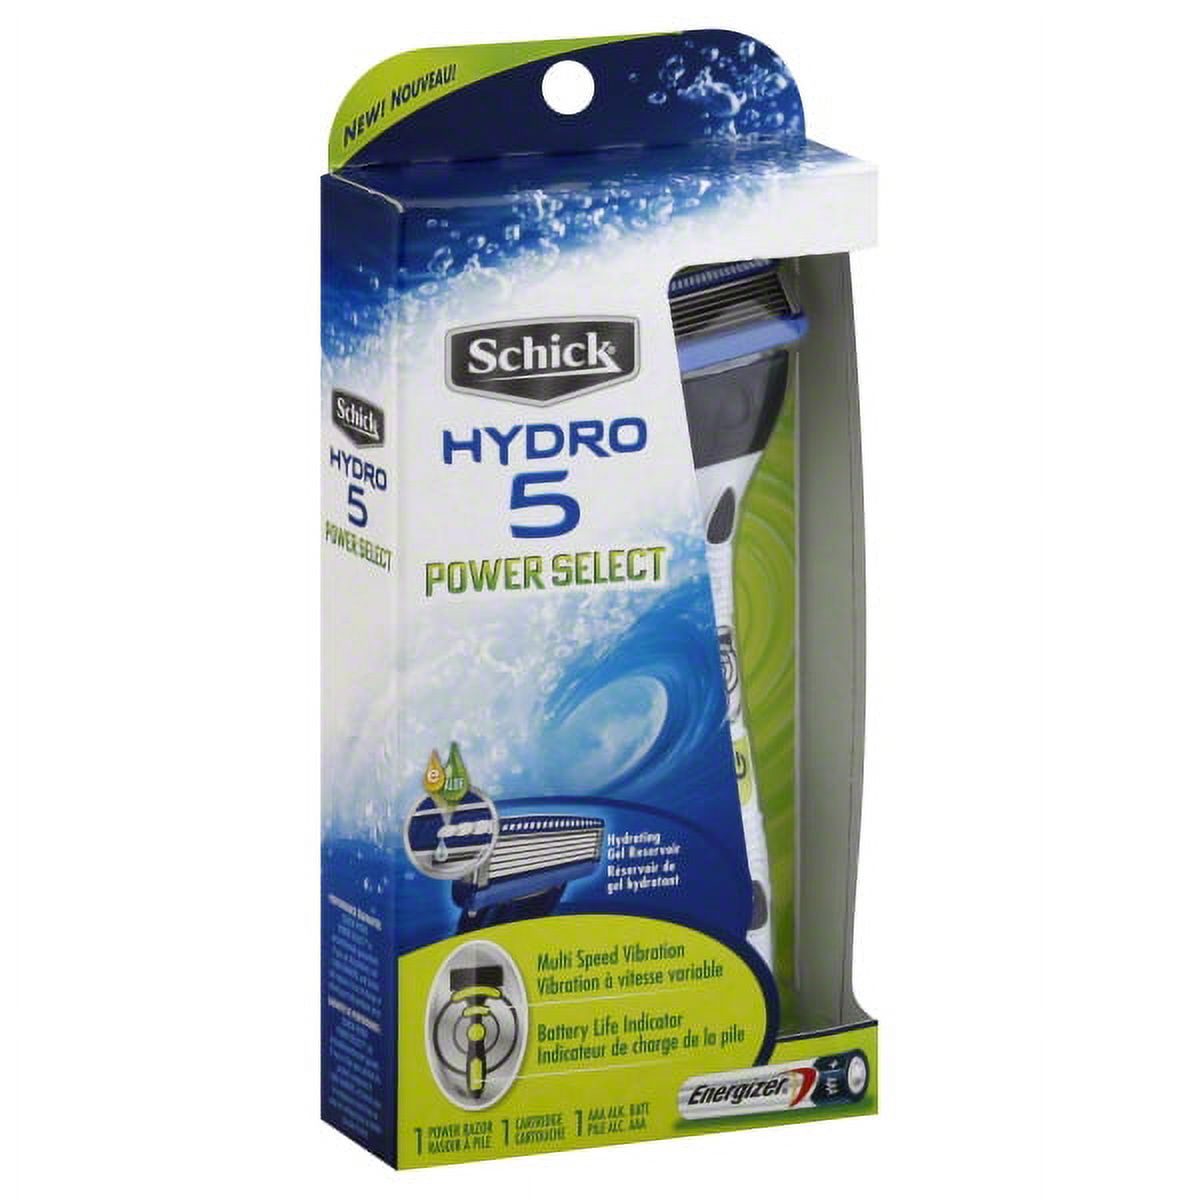 Energizer Schick Hydro 5 Power Select Power Razor Kit, 1 ea - image 1 of 9